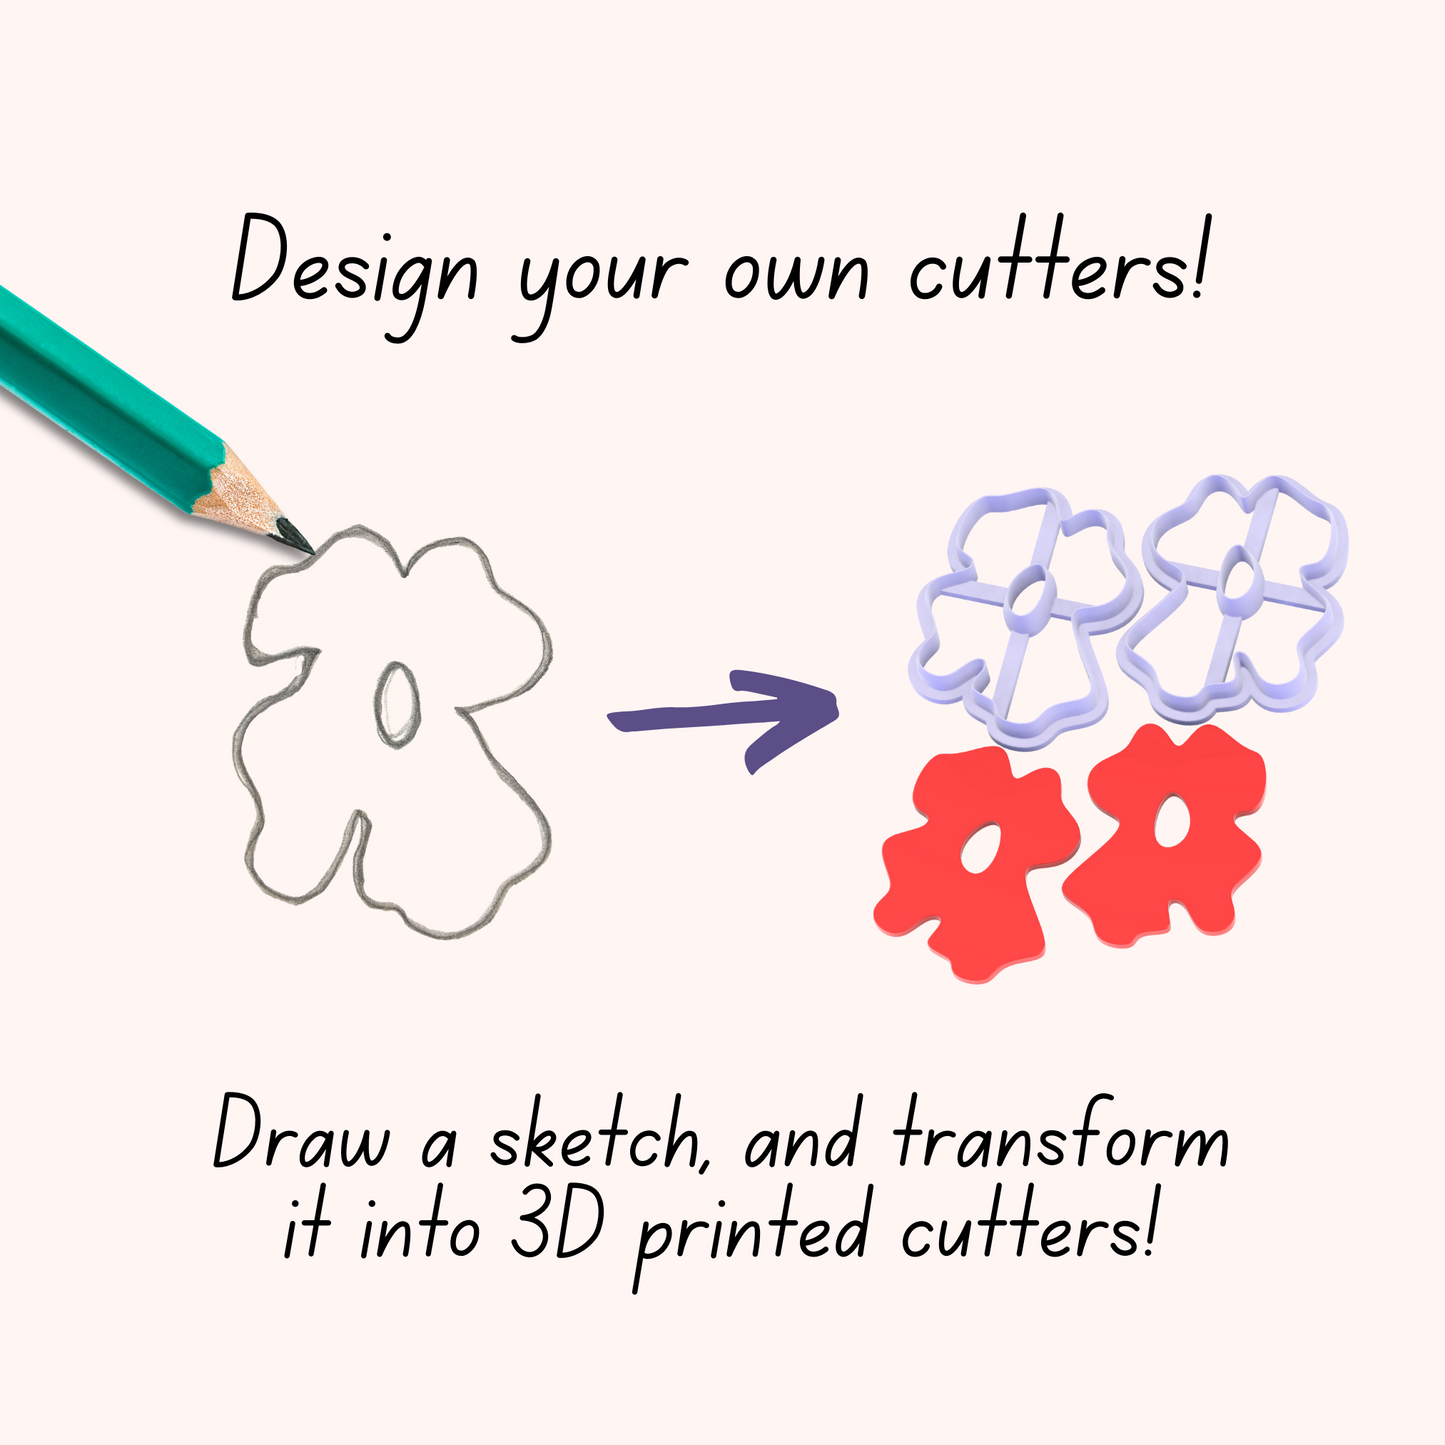 Custom cutter - DESIGN YOUR OWN CUTTER